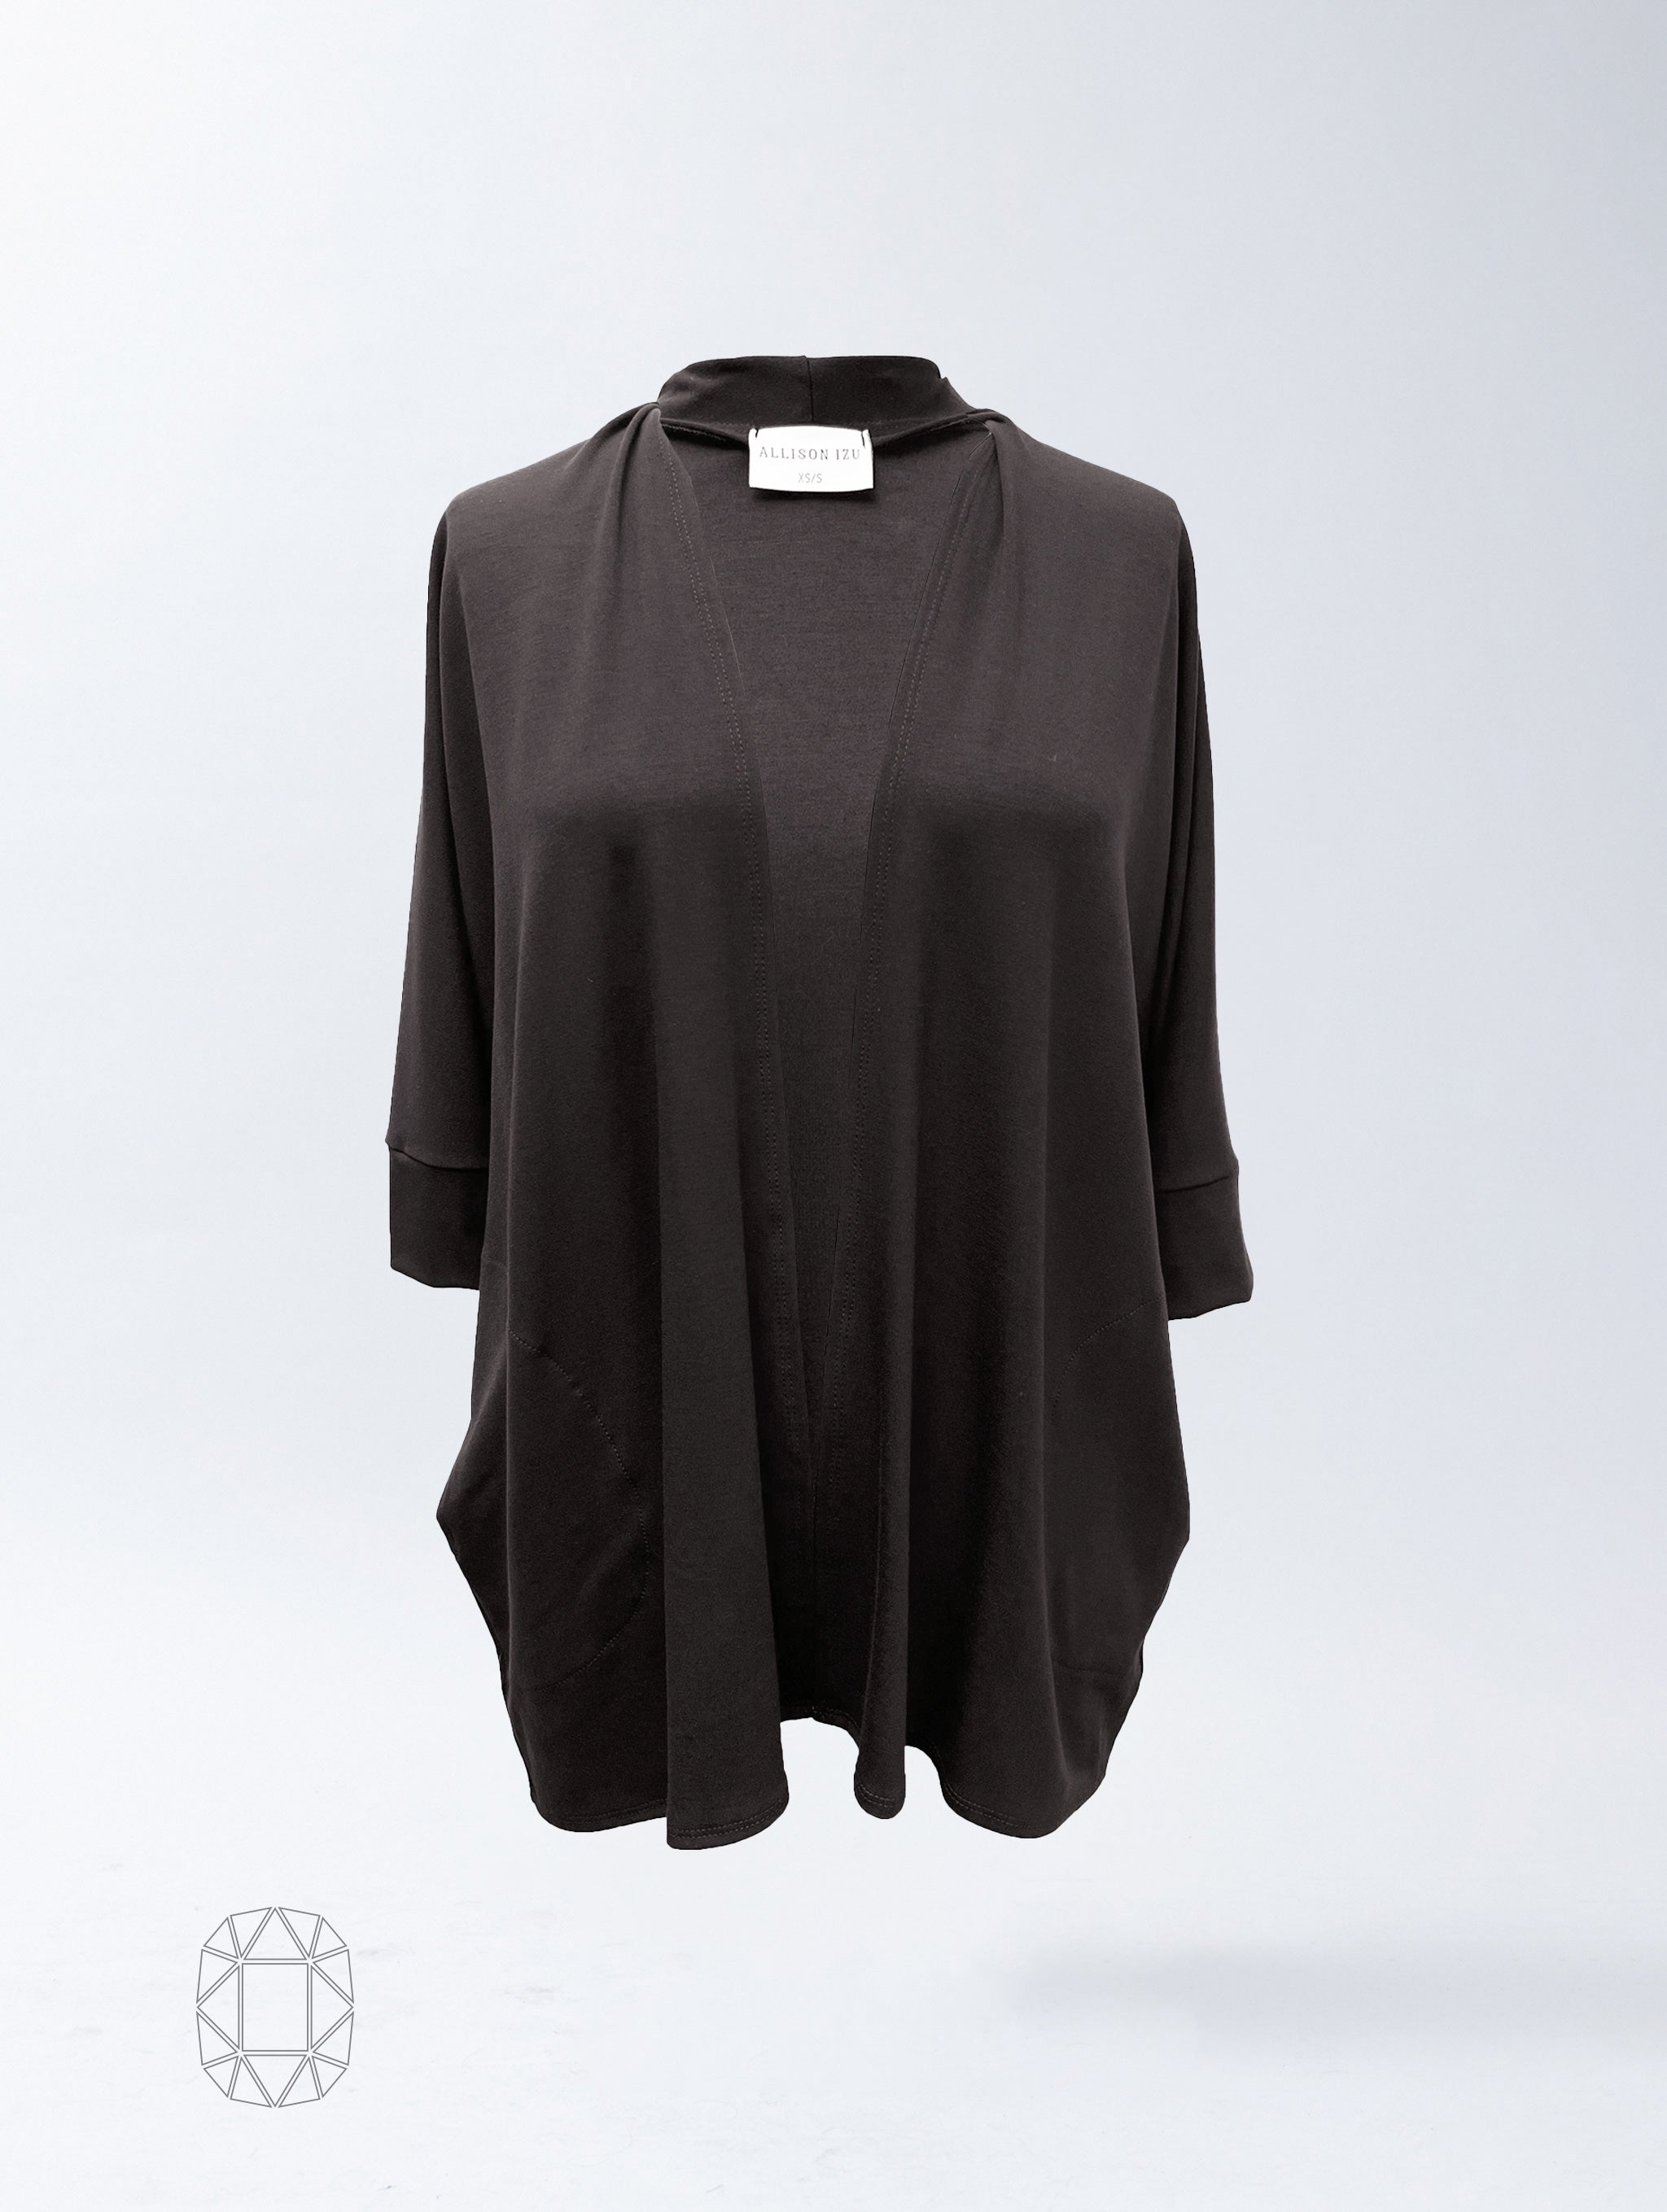 Loren Kimono - Washed Black Rayon Jersey